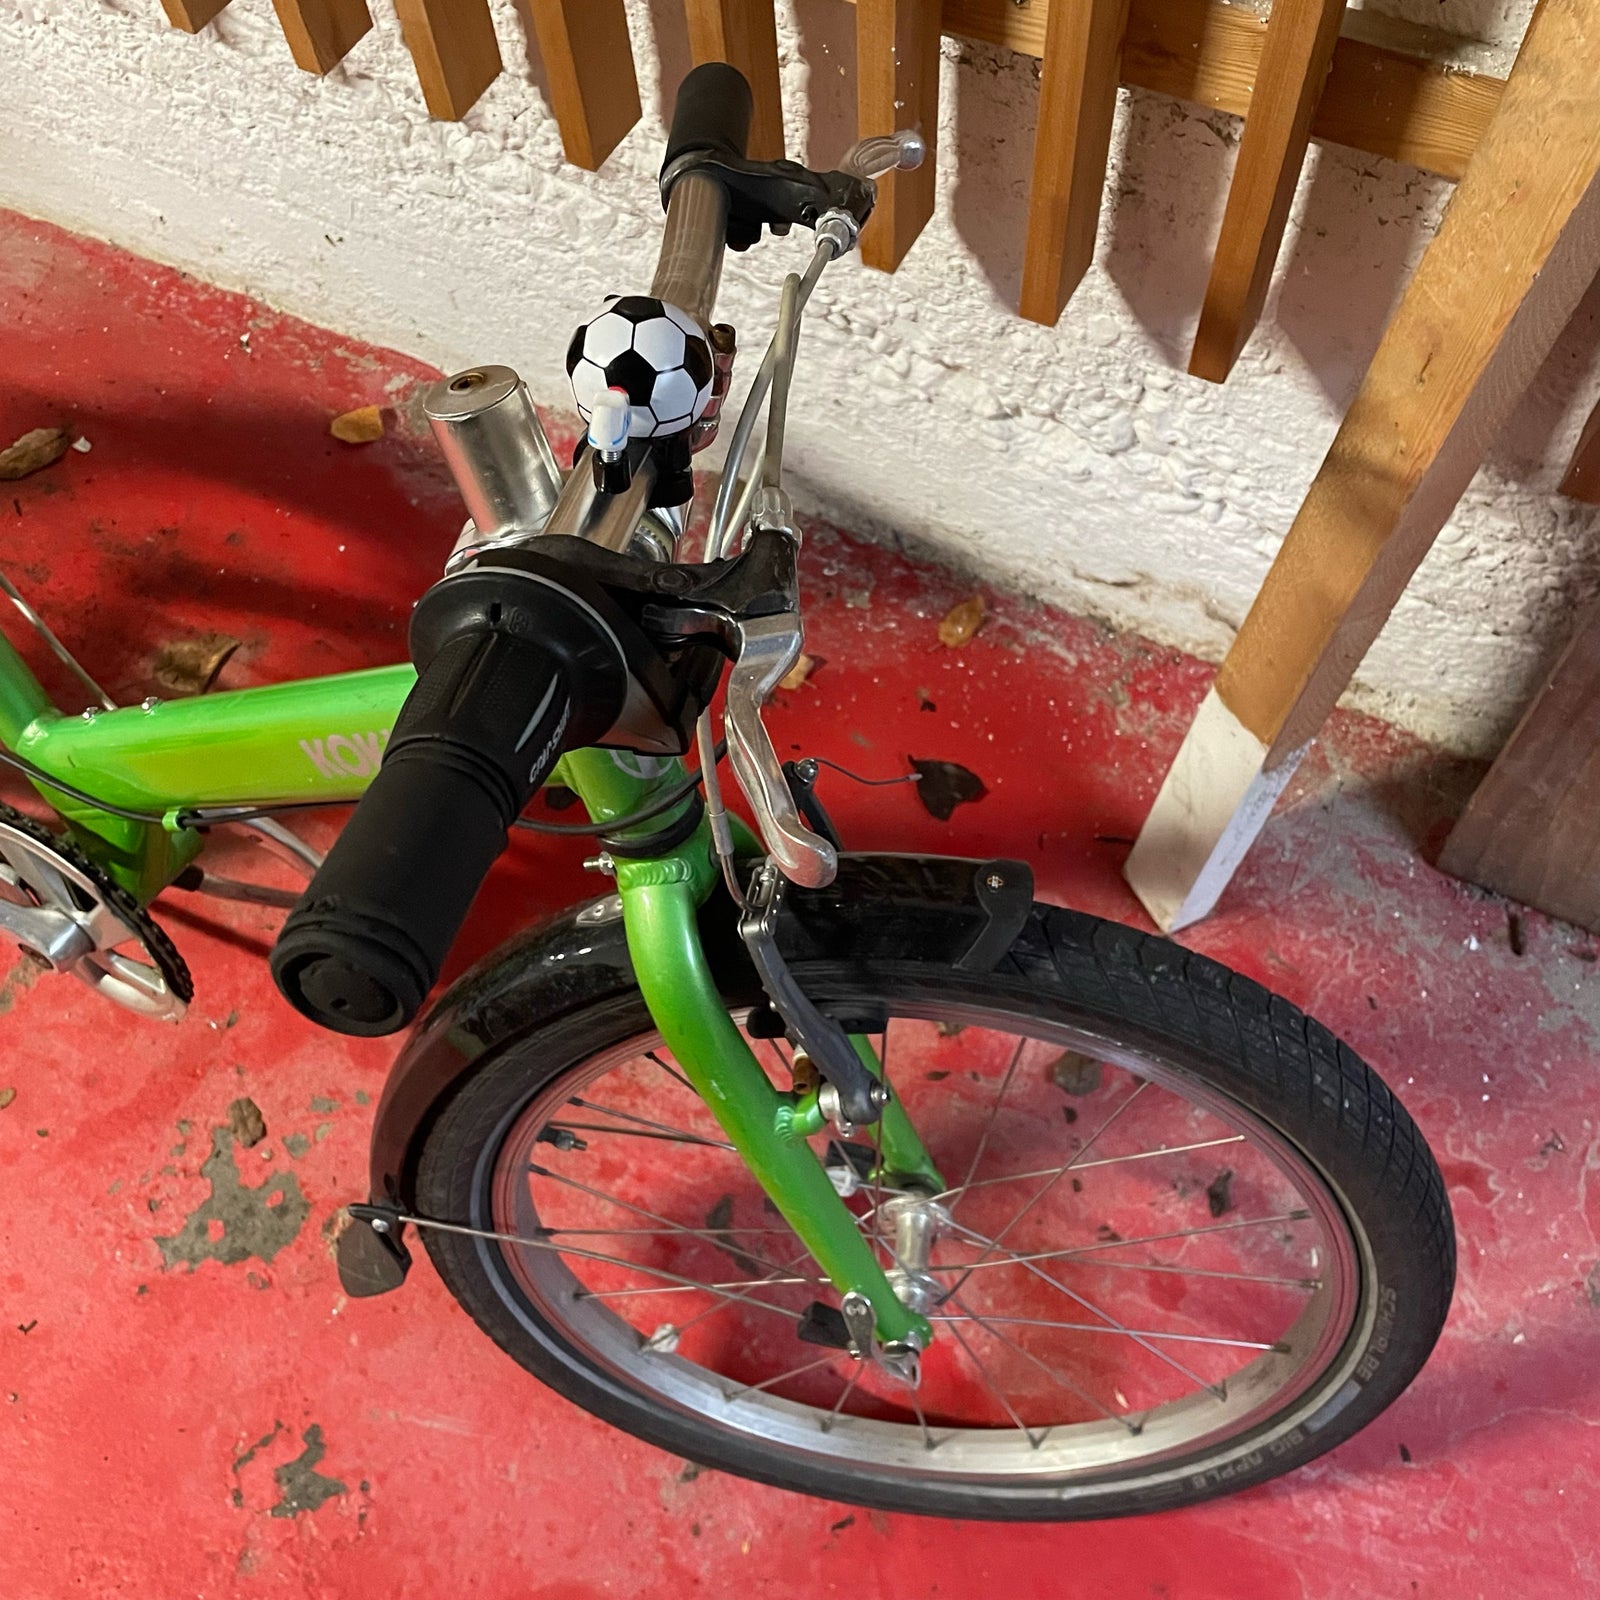 Unisex børnecykel, citybike, Kokua